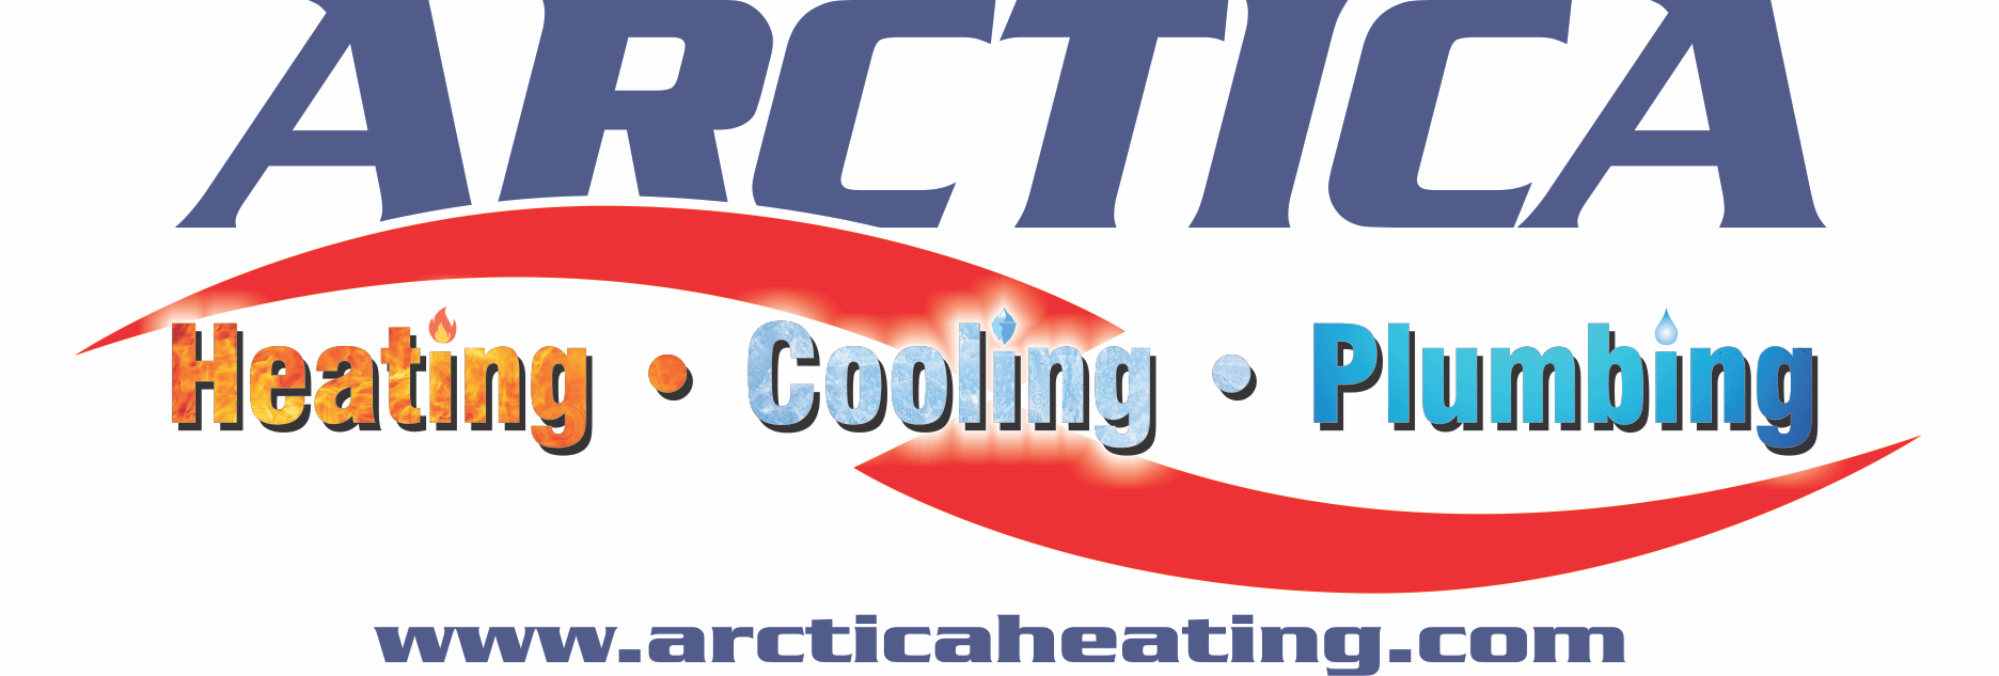 Arctica Heating and Cooling Logo Design, website design, Branding, Marketing, Website Maintenance and Hosting